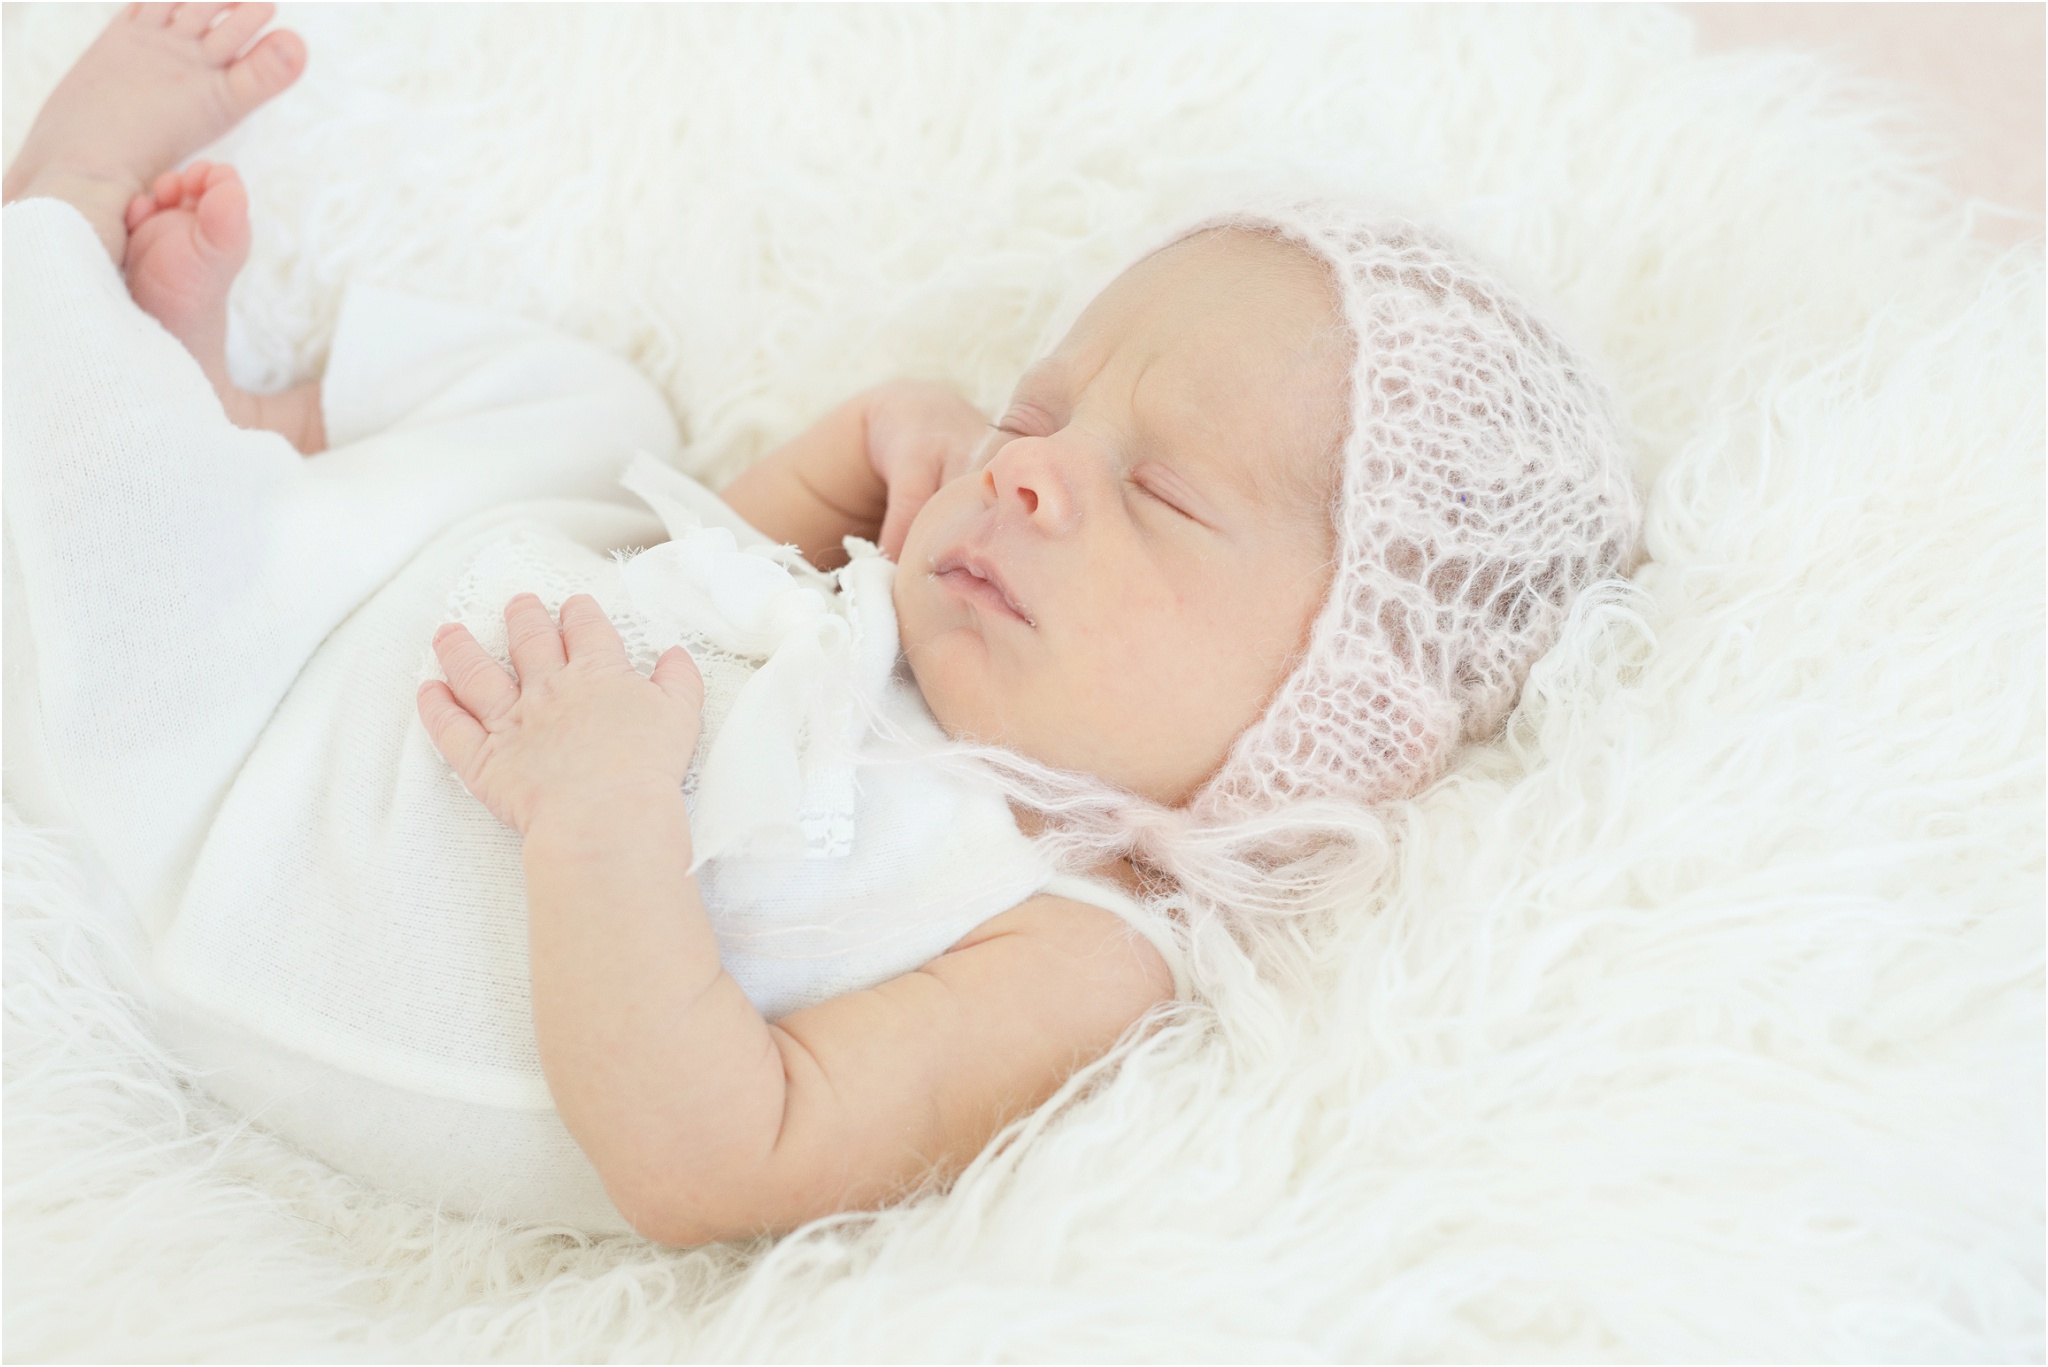 edmonton newborn photographer, nc photographer, newborn photos